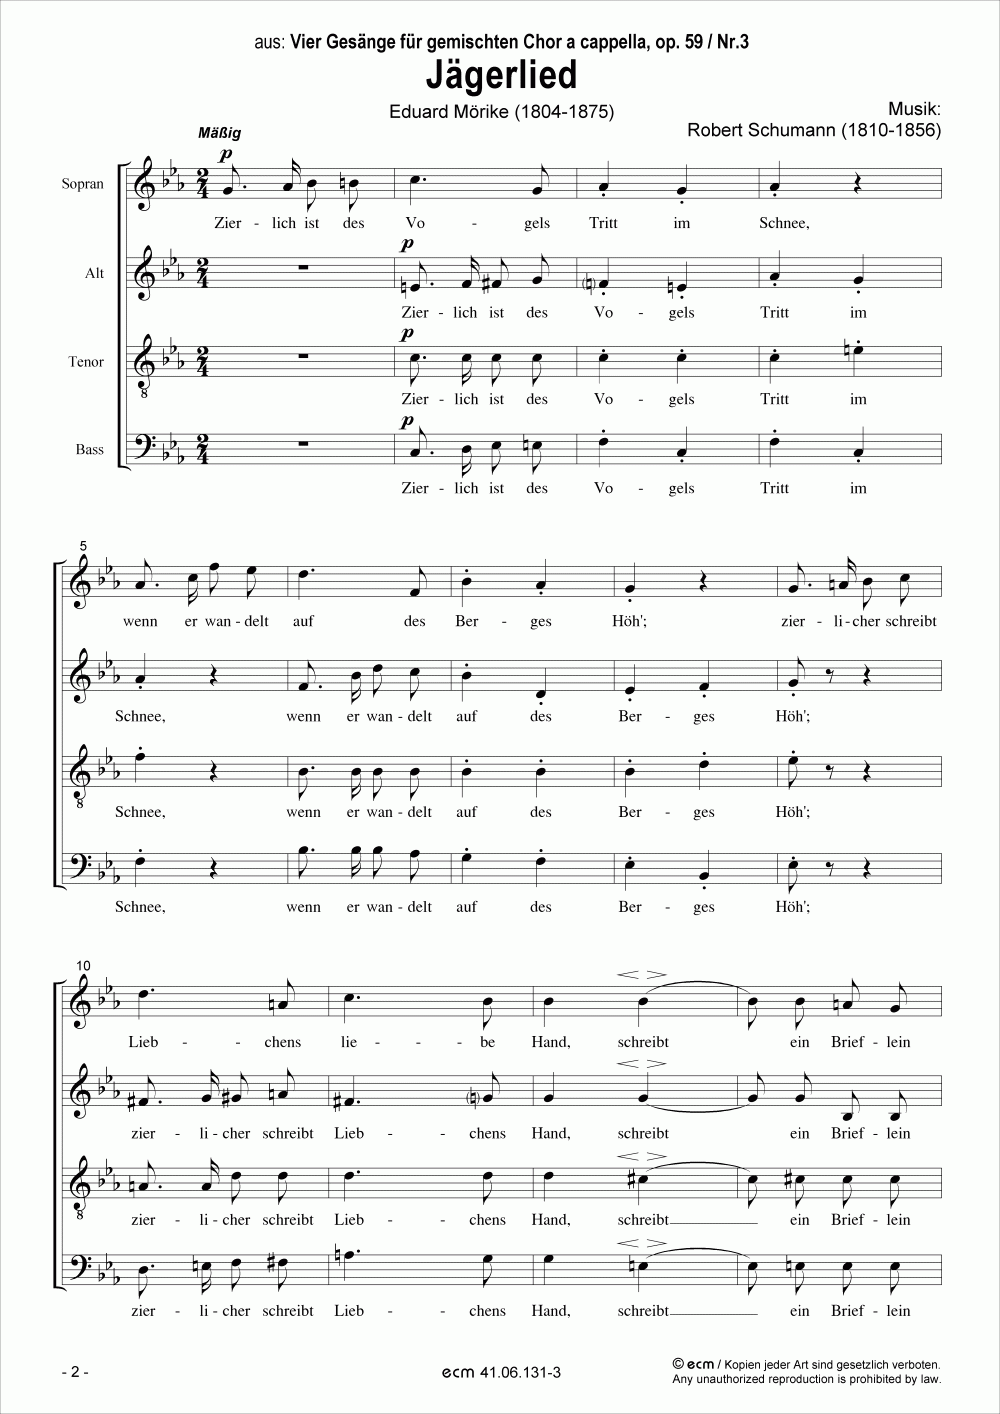 Jägerlied (op.59, No.3)